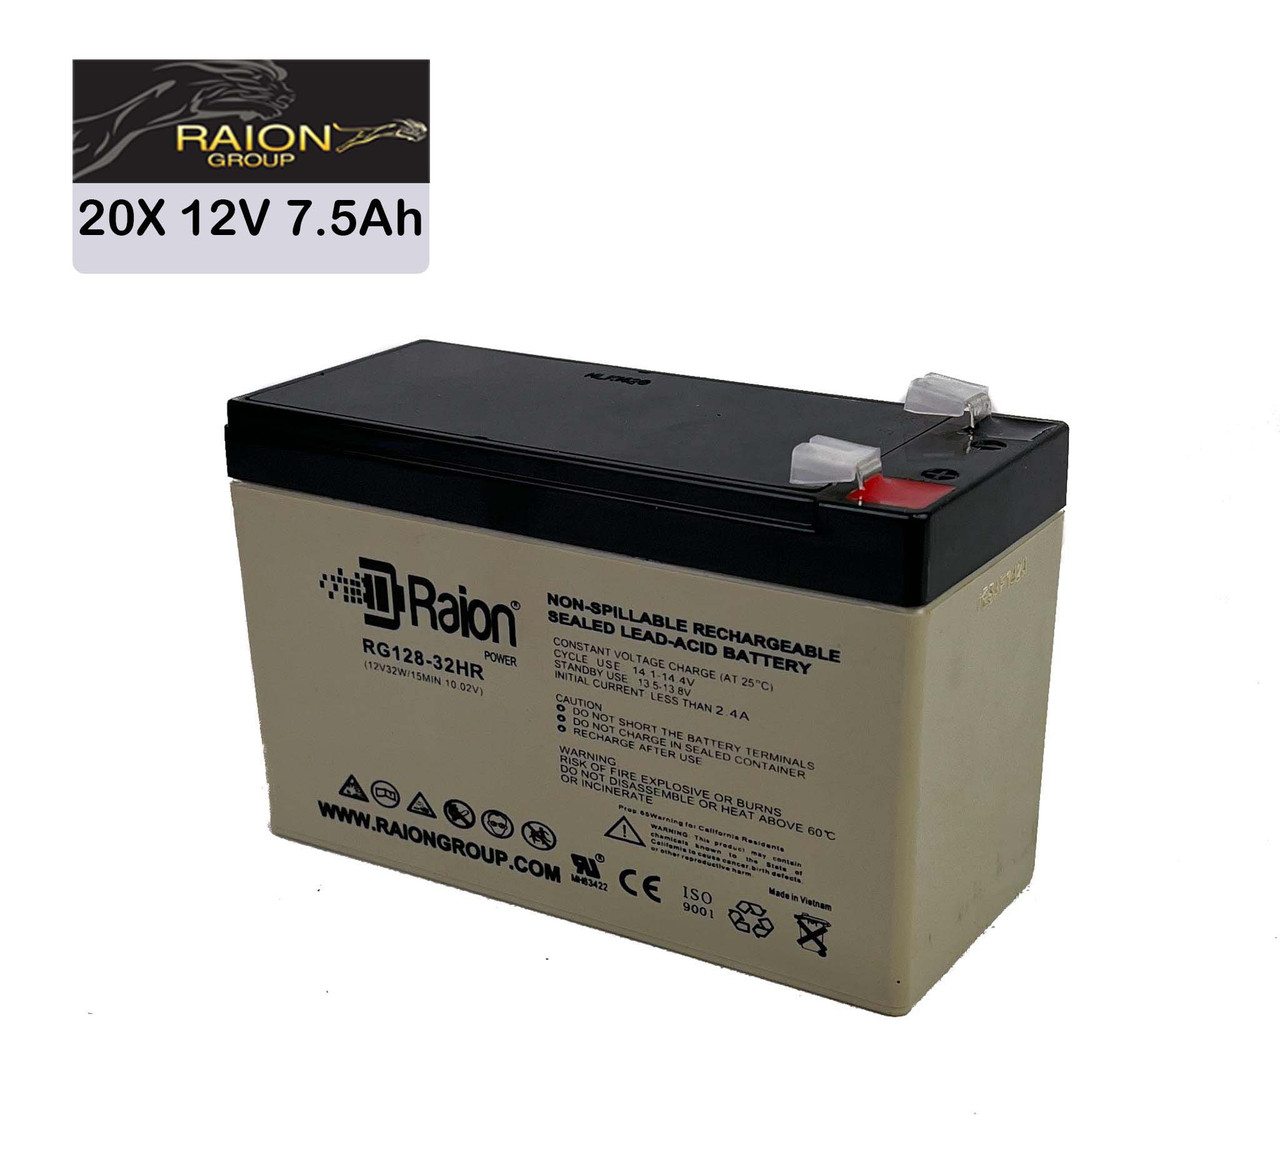 Raion Power 12V 7.5Ah High Rate Discharge UPS Batteries for Minuteman BP120V13 - 20 Pack